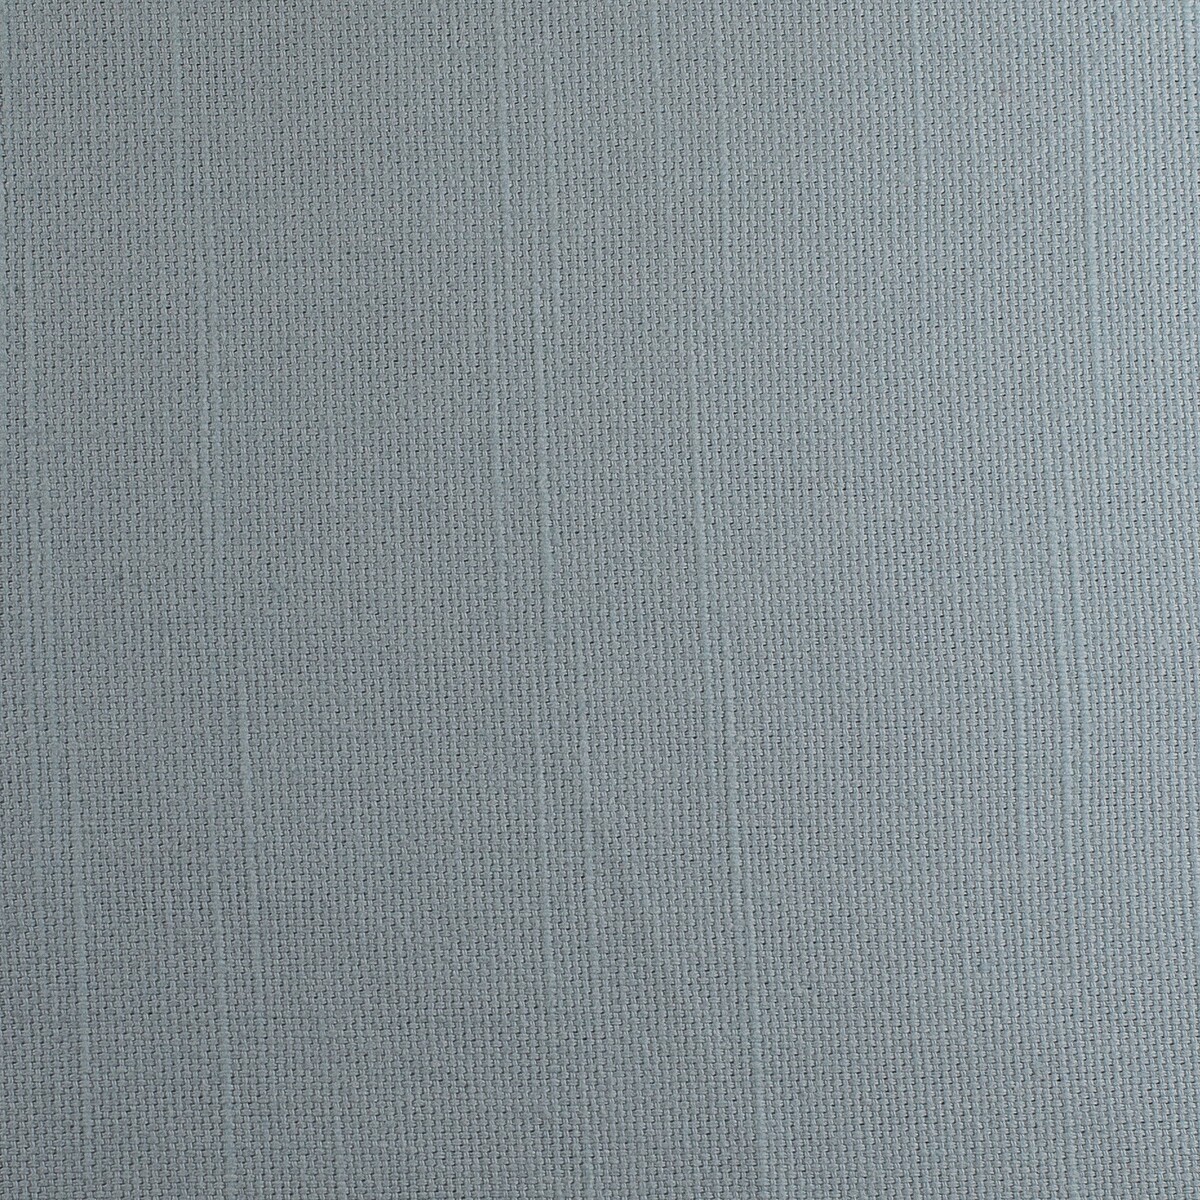 Turquoise 100% Linen